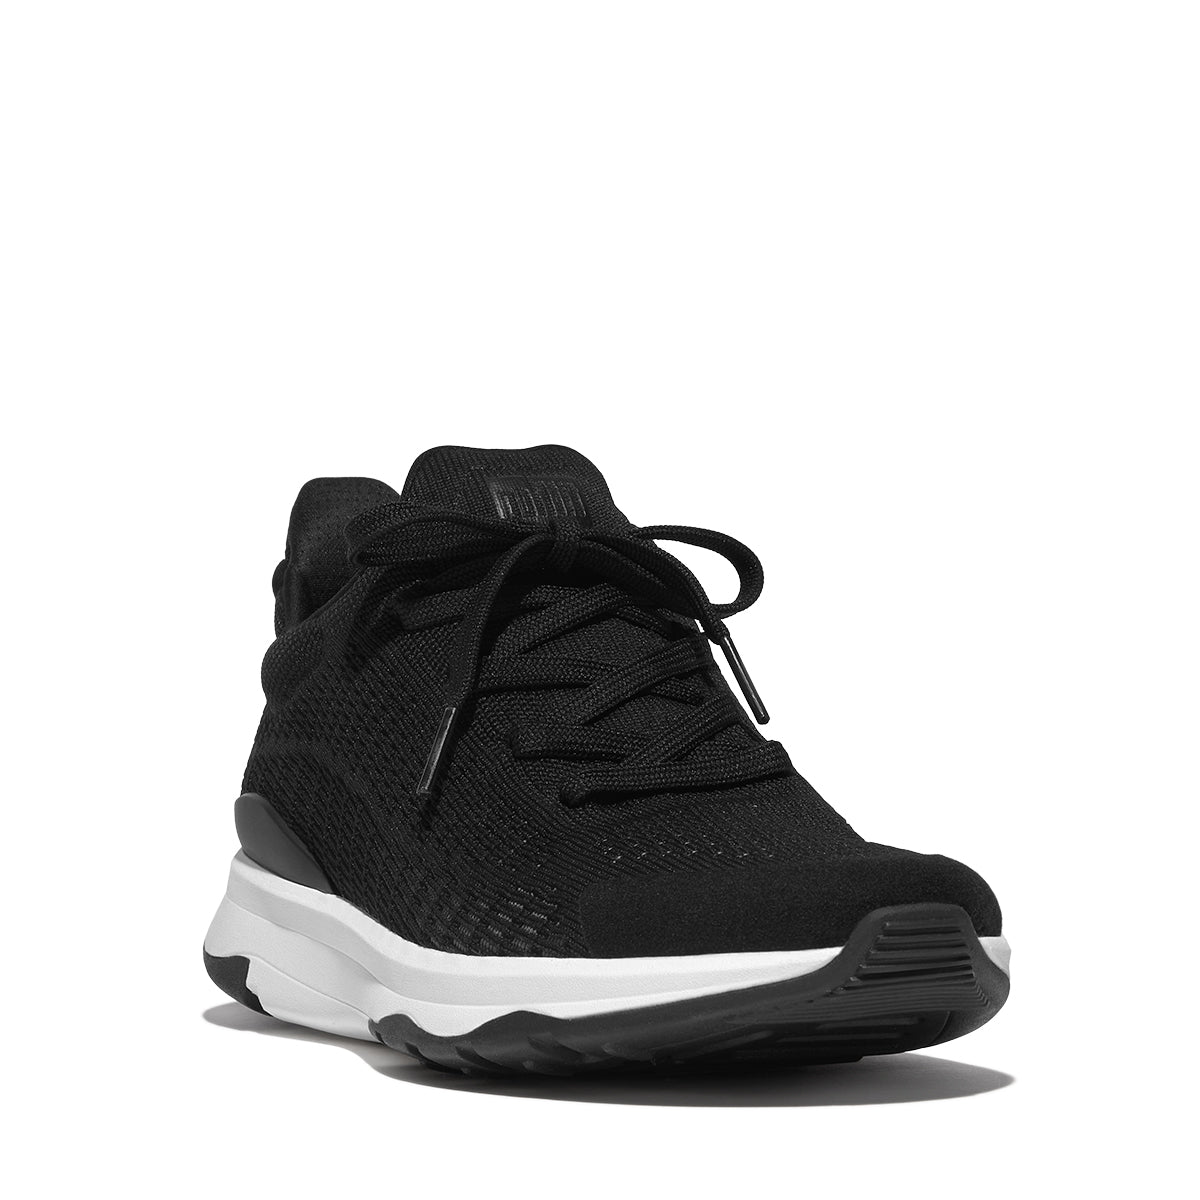 Fit-Flop Vitamin Ffx Knit Sports Sneakers Black נעלי פיט פלופ לנשים